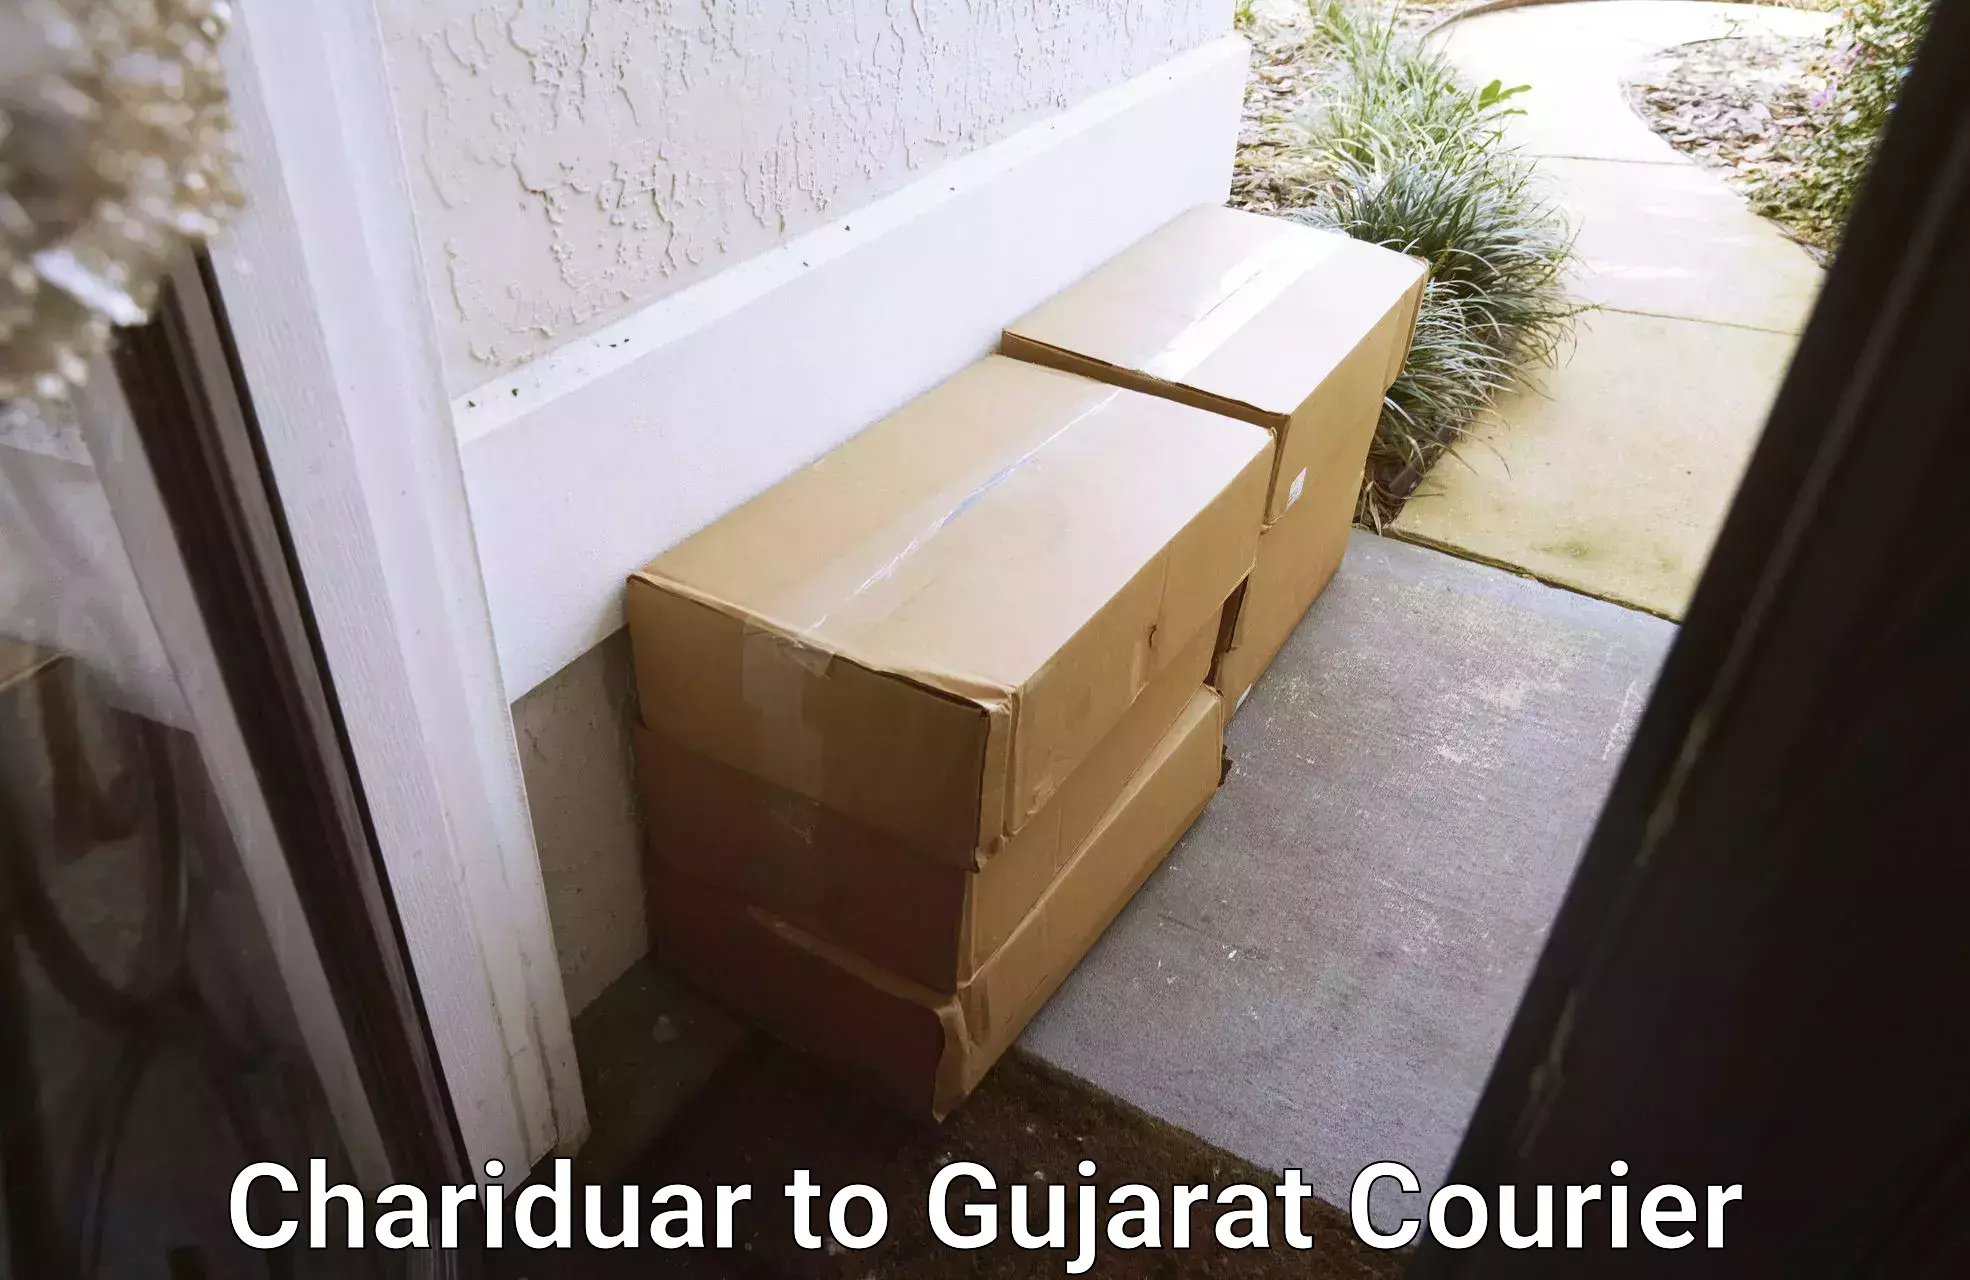 Courier service comparison Chariduar to Dhanera